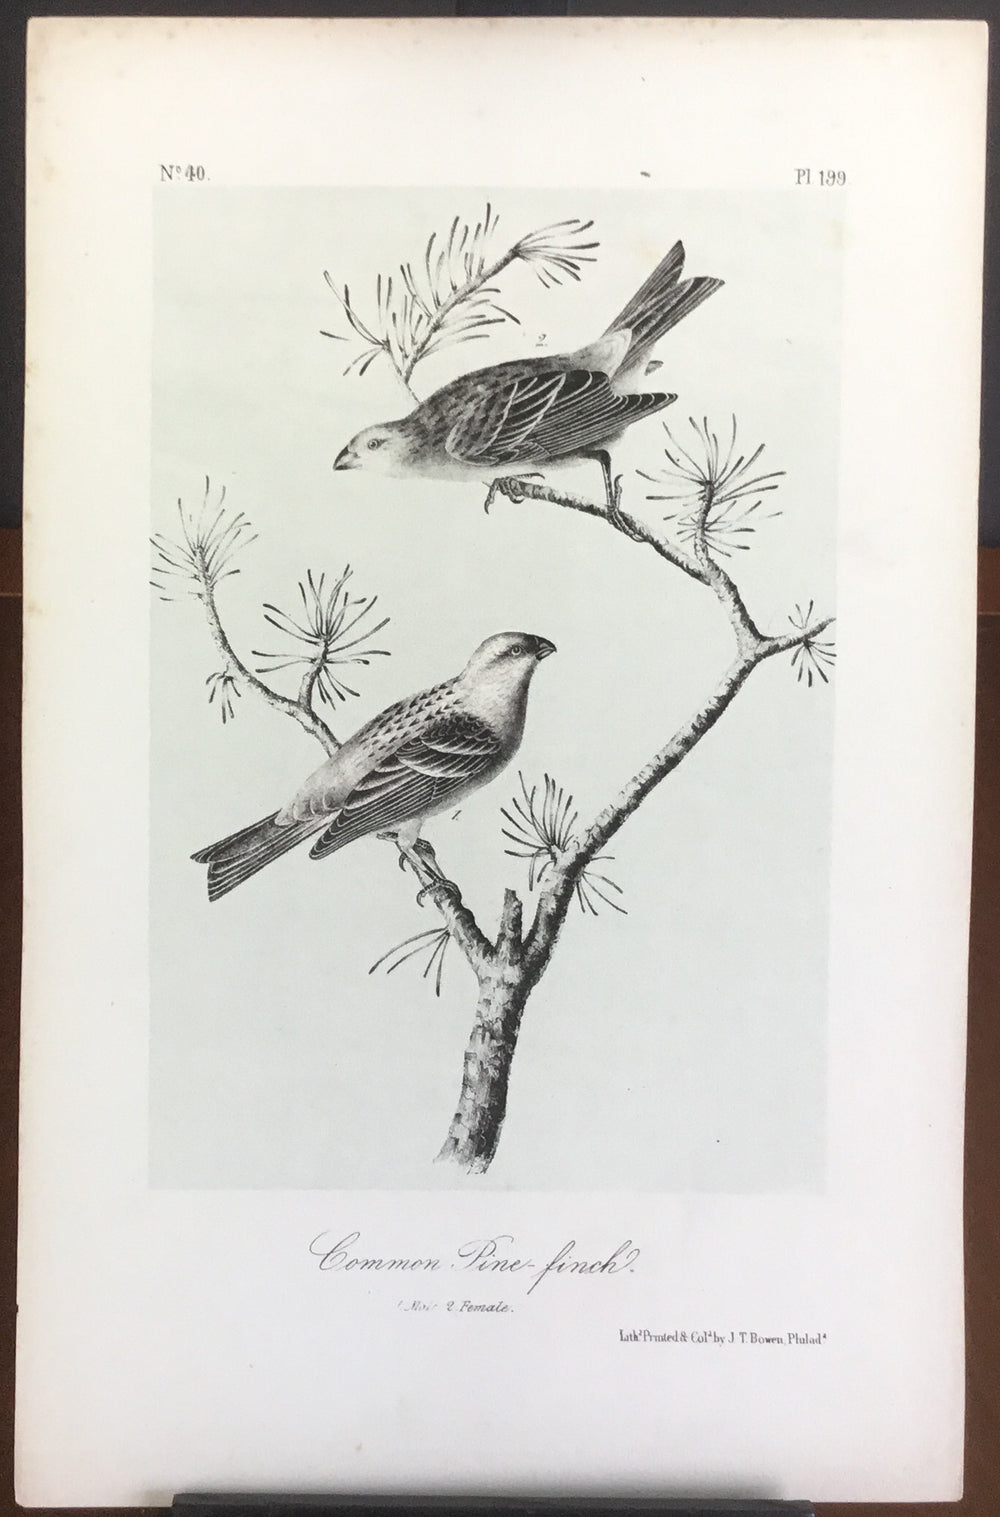 Audubon Octavo Common Pine Finch (2), plate 199, uncolored test sheet, 7 x 11